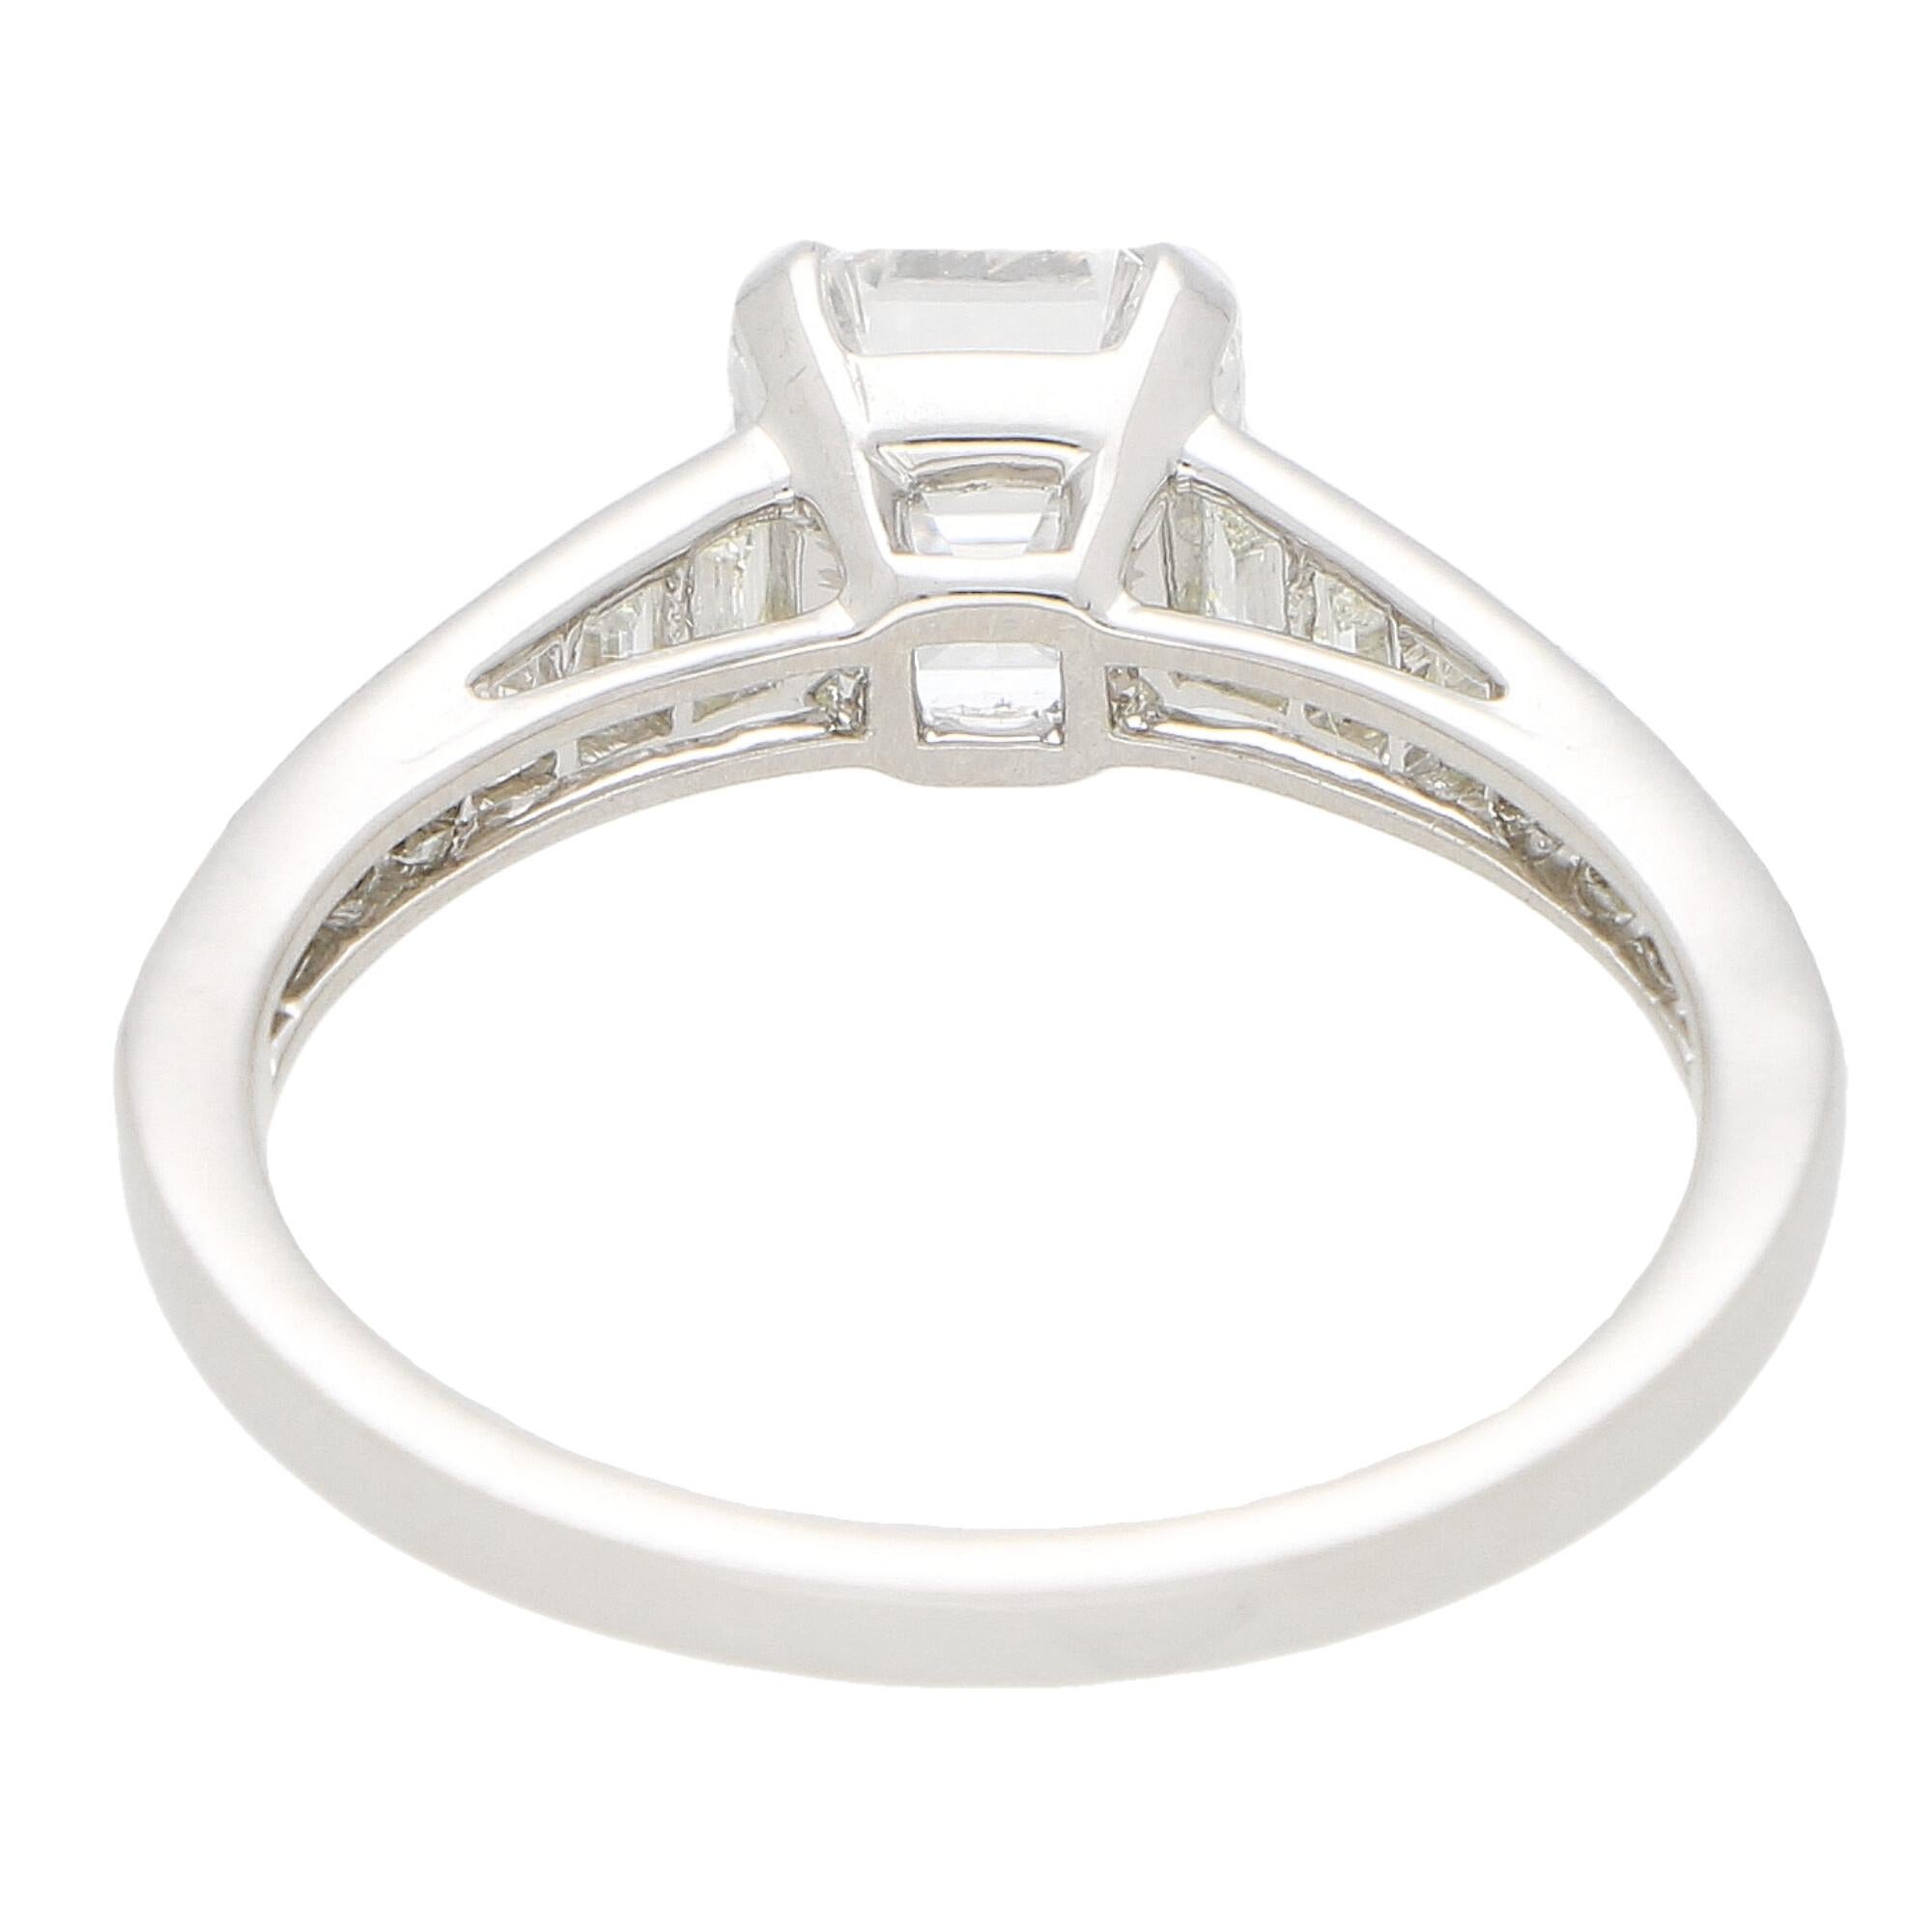 GIA Certified Art Deco Style Asscher Cut Diamond Engagement Ring in Platinum 1